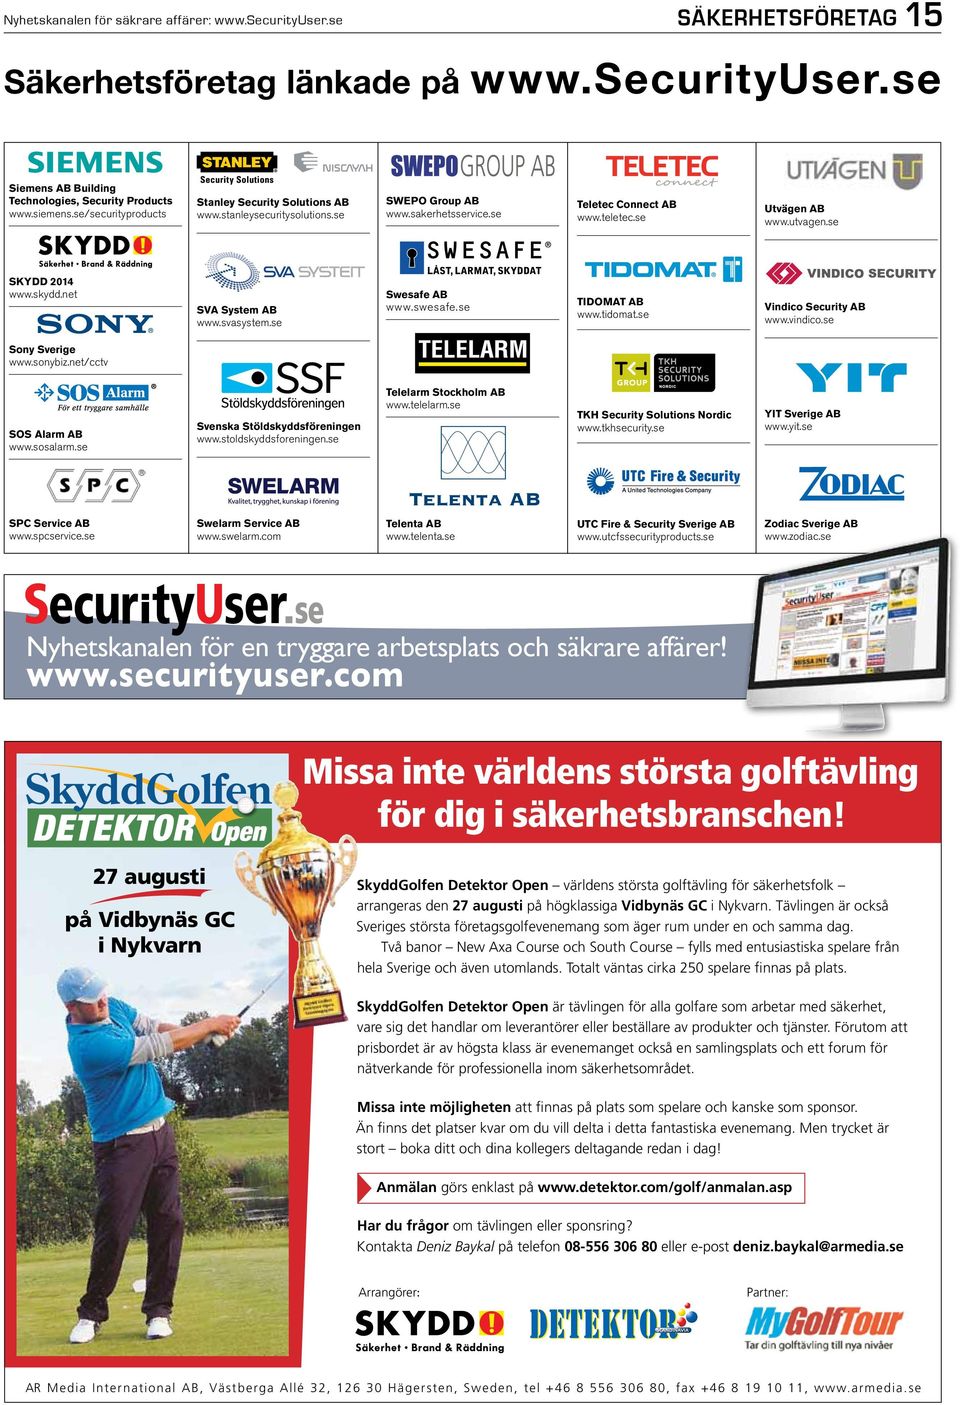 utvagen.se TIDOMAT AB www.tidomat.se Vindico Security AB www.vindico.se TKH Security Solutions Nordic www.tkhsecurity.se YIT Sverige AB www.yit.se UTC Fire & Security Sverige AB www.